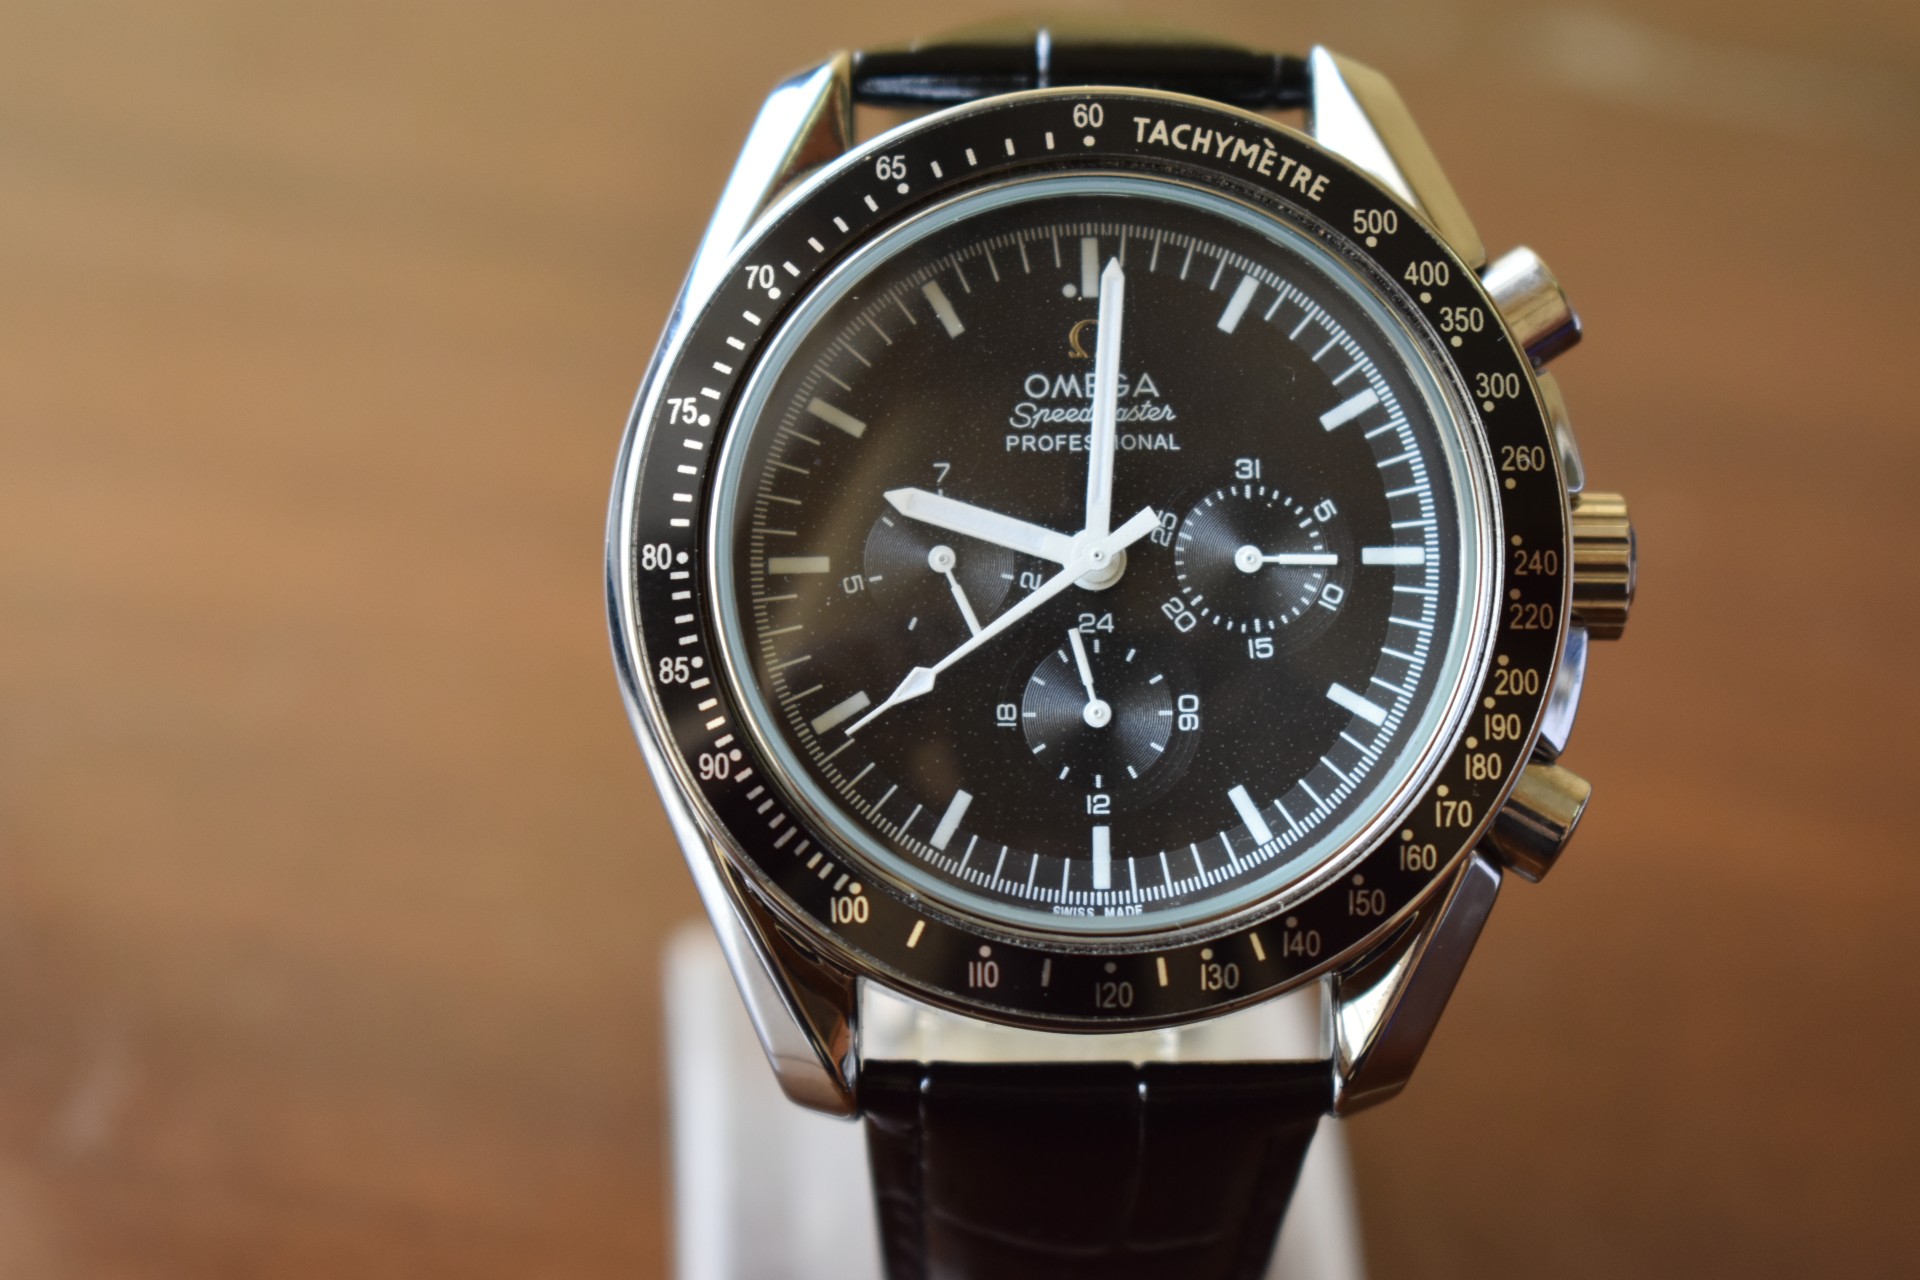 2019 Omega Speed master Professional 'Legendary' Moon watch for sale in Nairobi,Kenya.